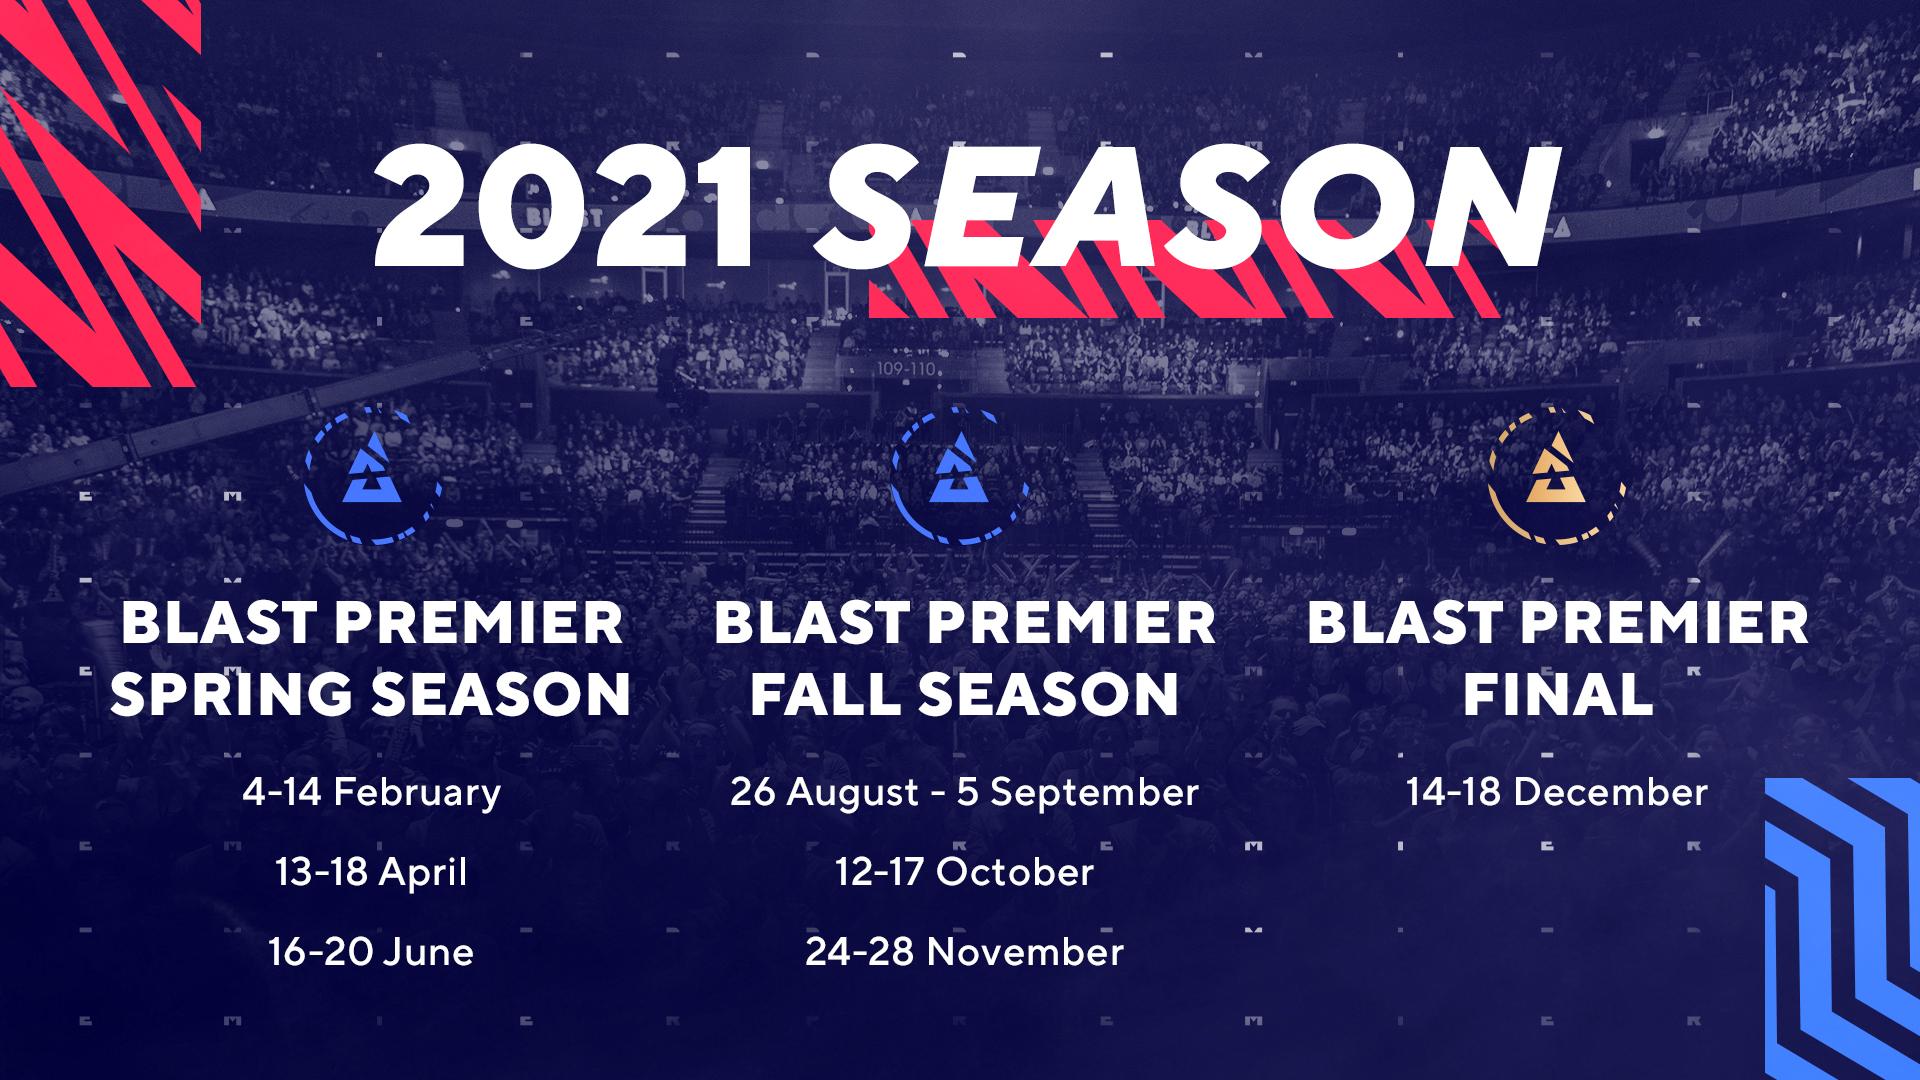 BLAST Premier 2021 event dates